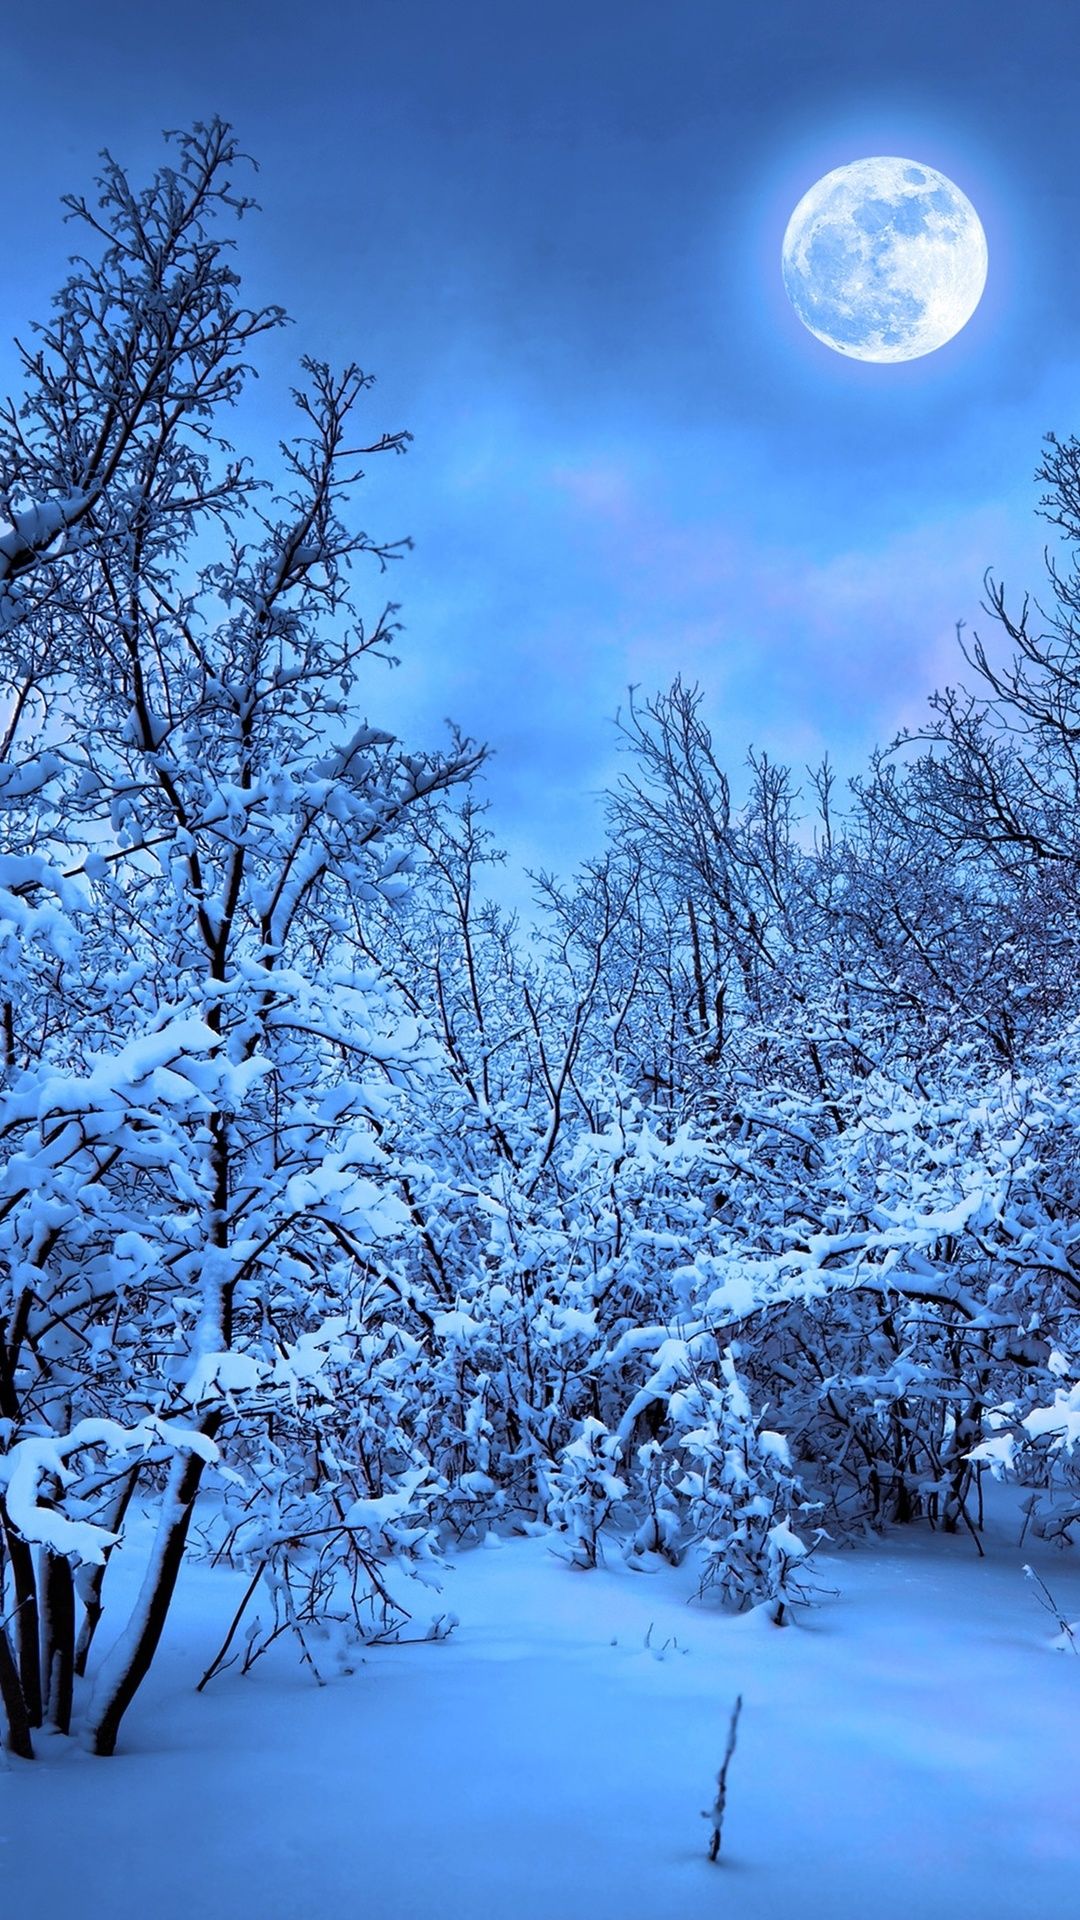 Winter Snow Nature 4k In 1080x1920 Resolution. Snow wallpaper iphone, iPhone wallpaper winter, iPhone 5s wallpaper